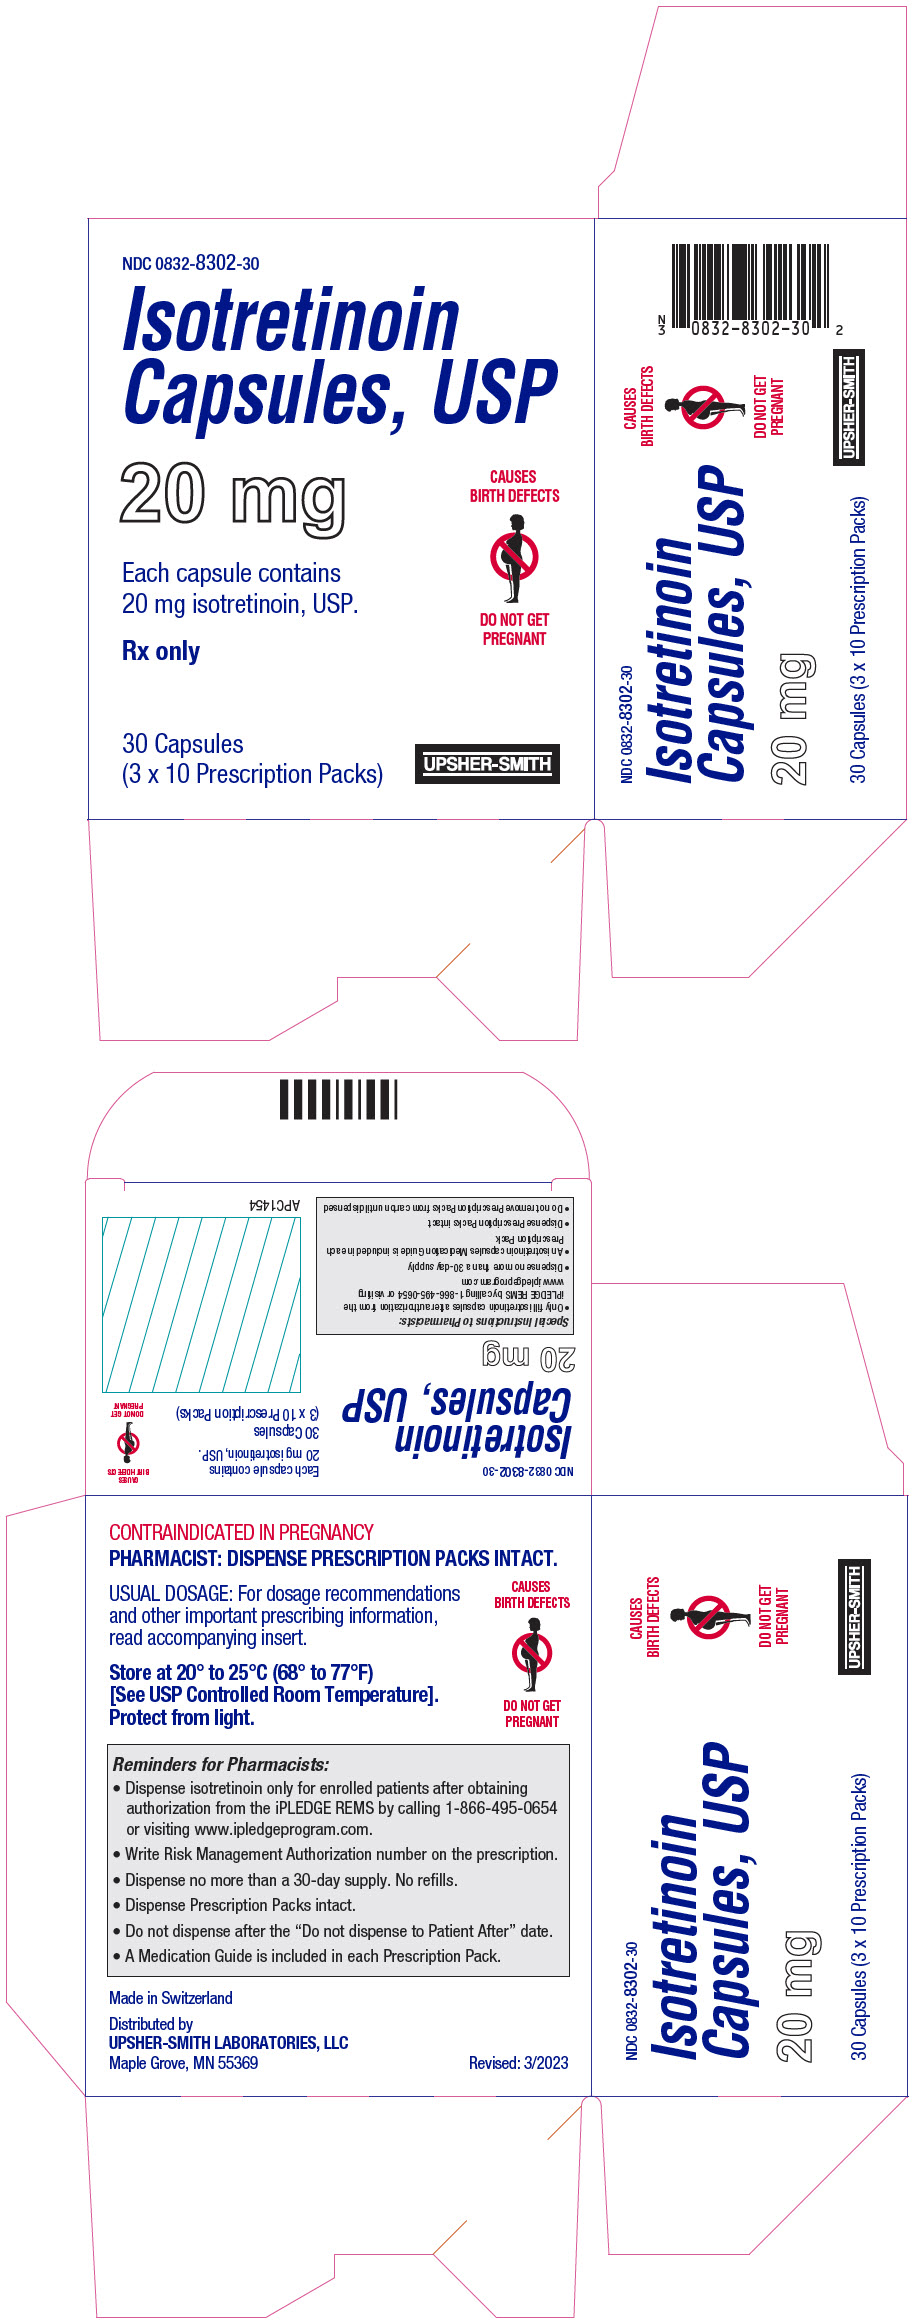 PRINCIPAL DISPLAY PANEL - 20 mg Blister Pack Box